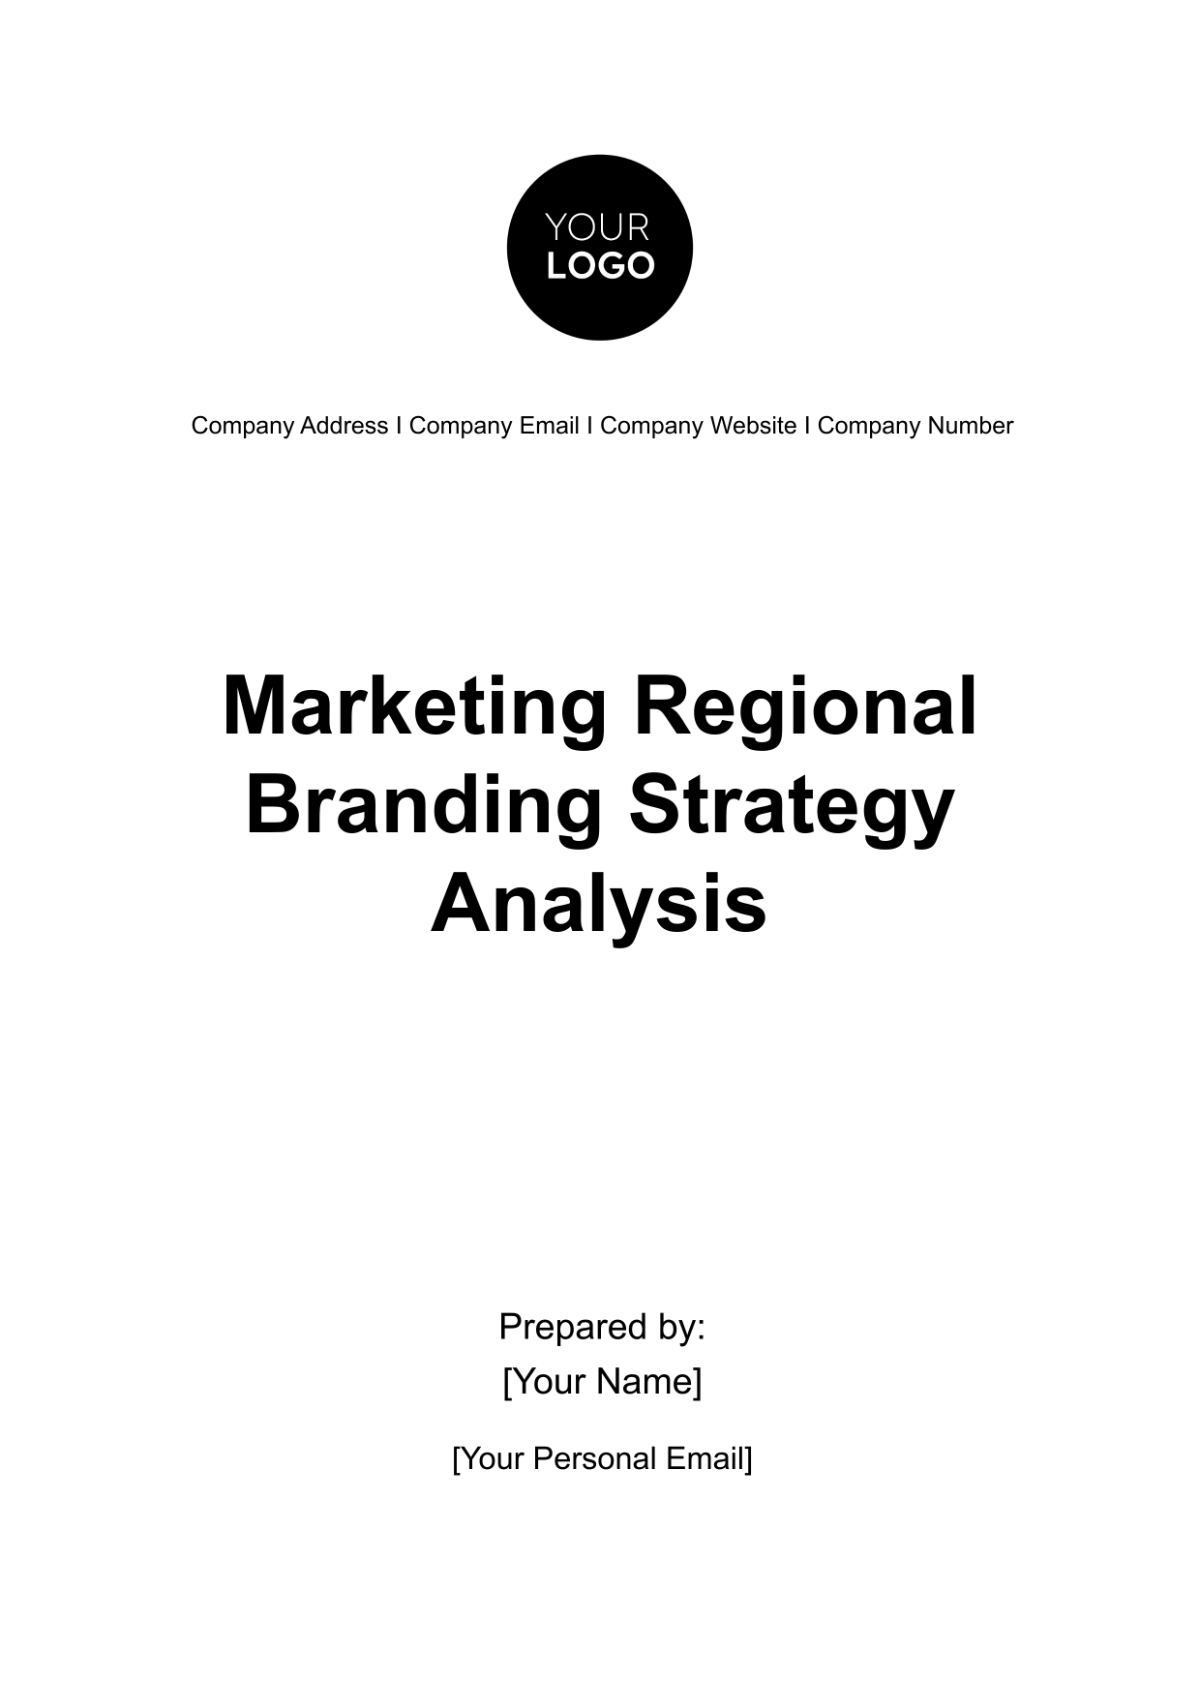 Free Marketing Regional Branding Strategy Analysis Template